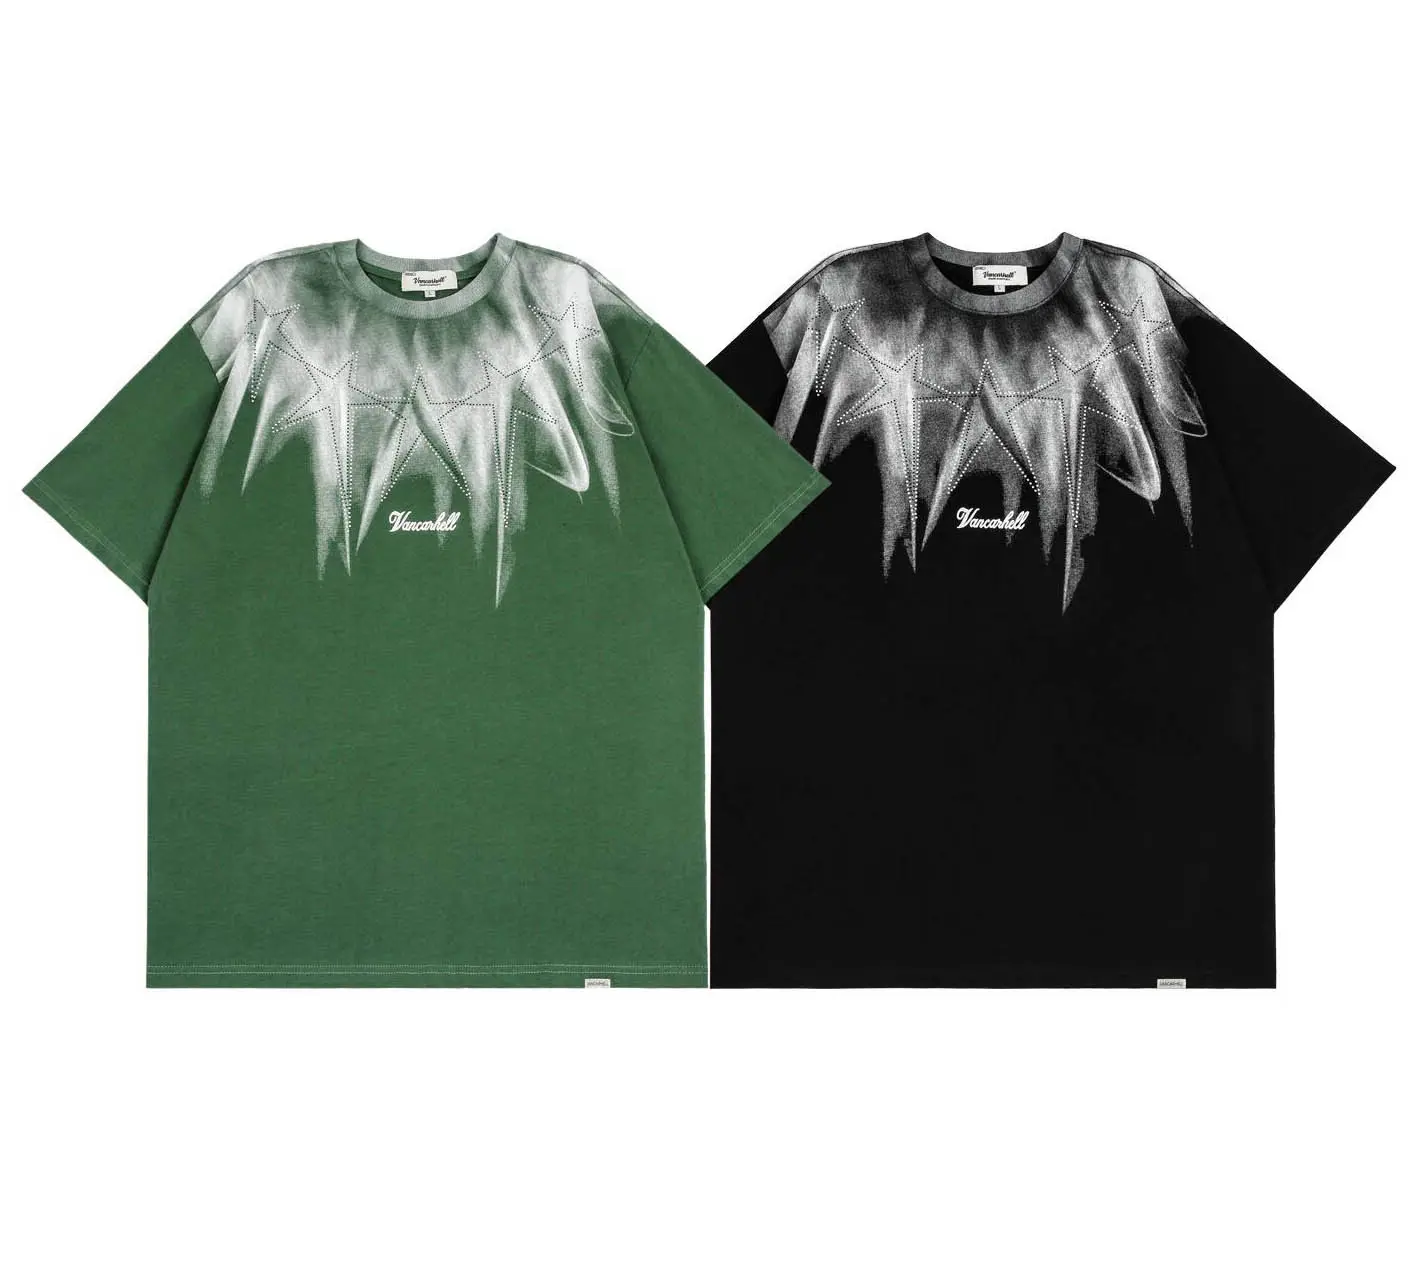 Custom For Men Graphic T-shirt With Rhinestones Printed High Quality Rhinestones Heat Iron On Transfer Designs T shirt